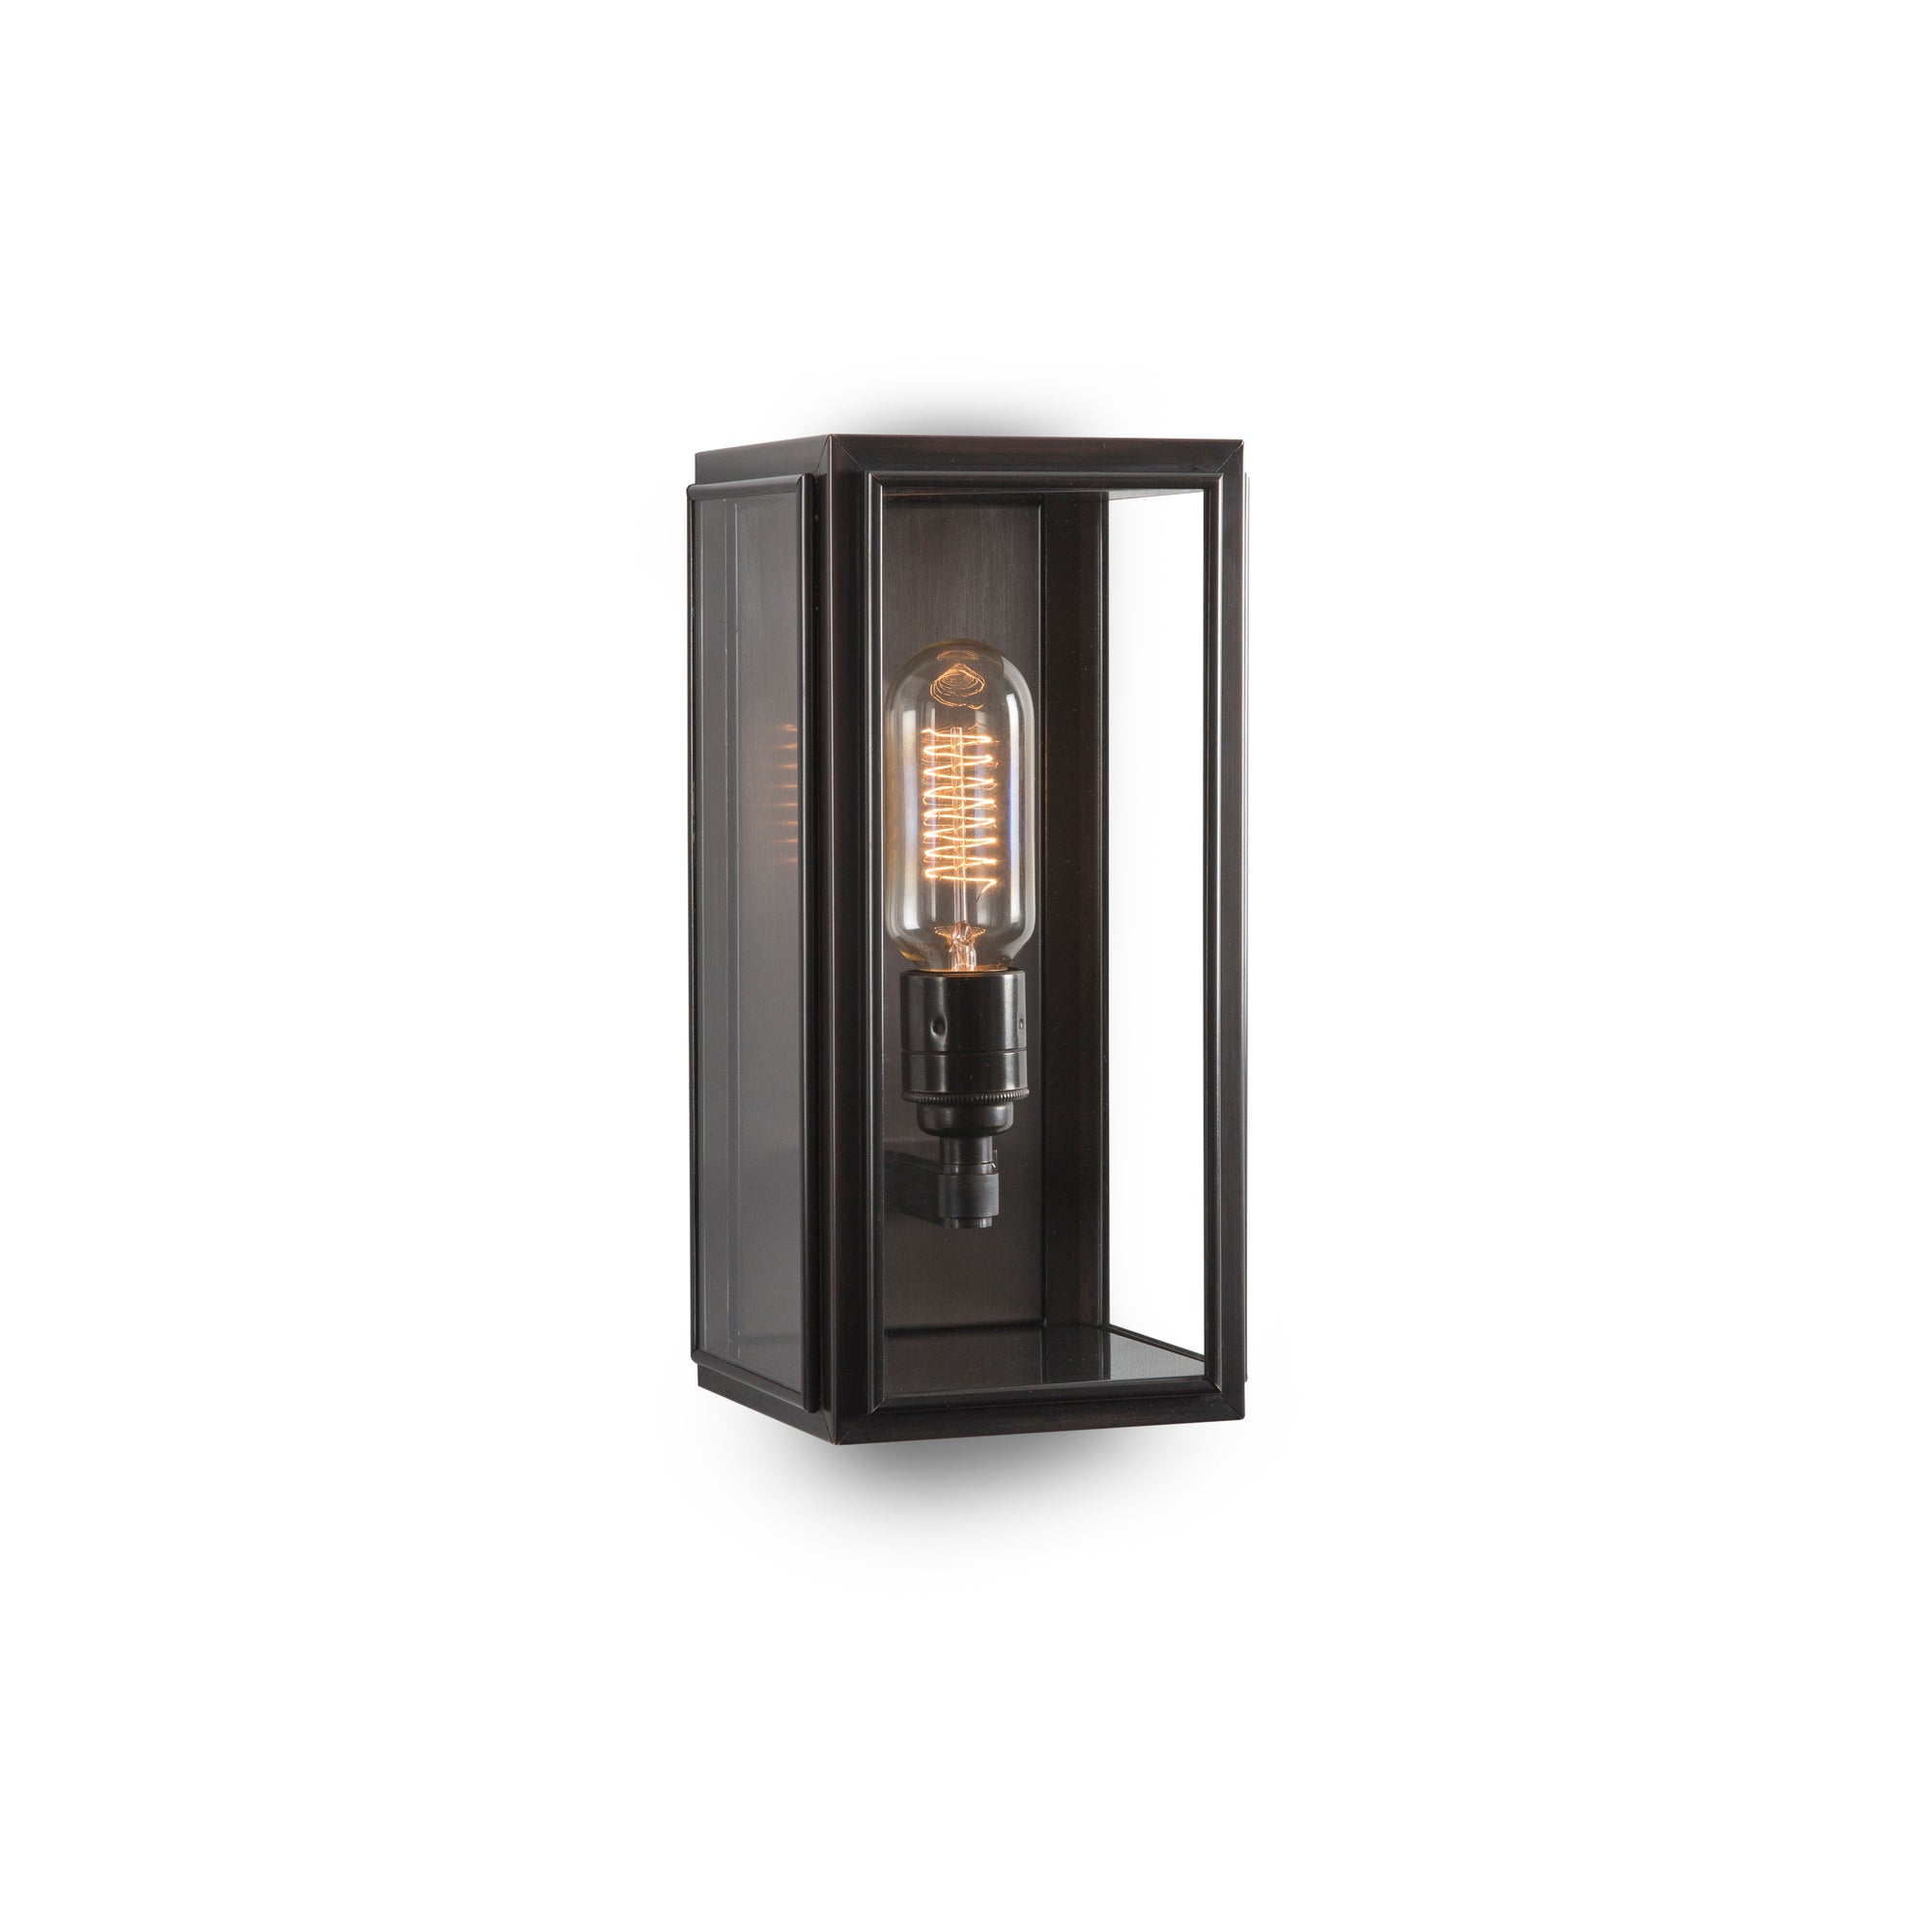 J Adams Ash Small Wall Lantern box light in bronze with clear glass